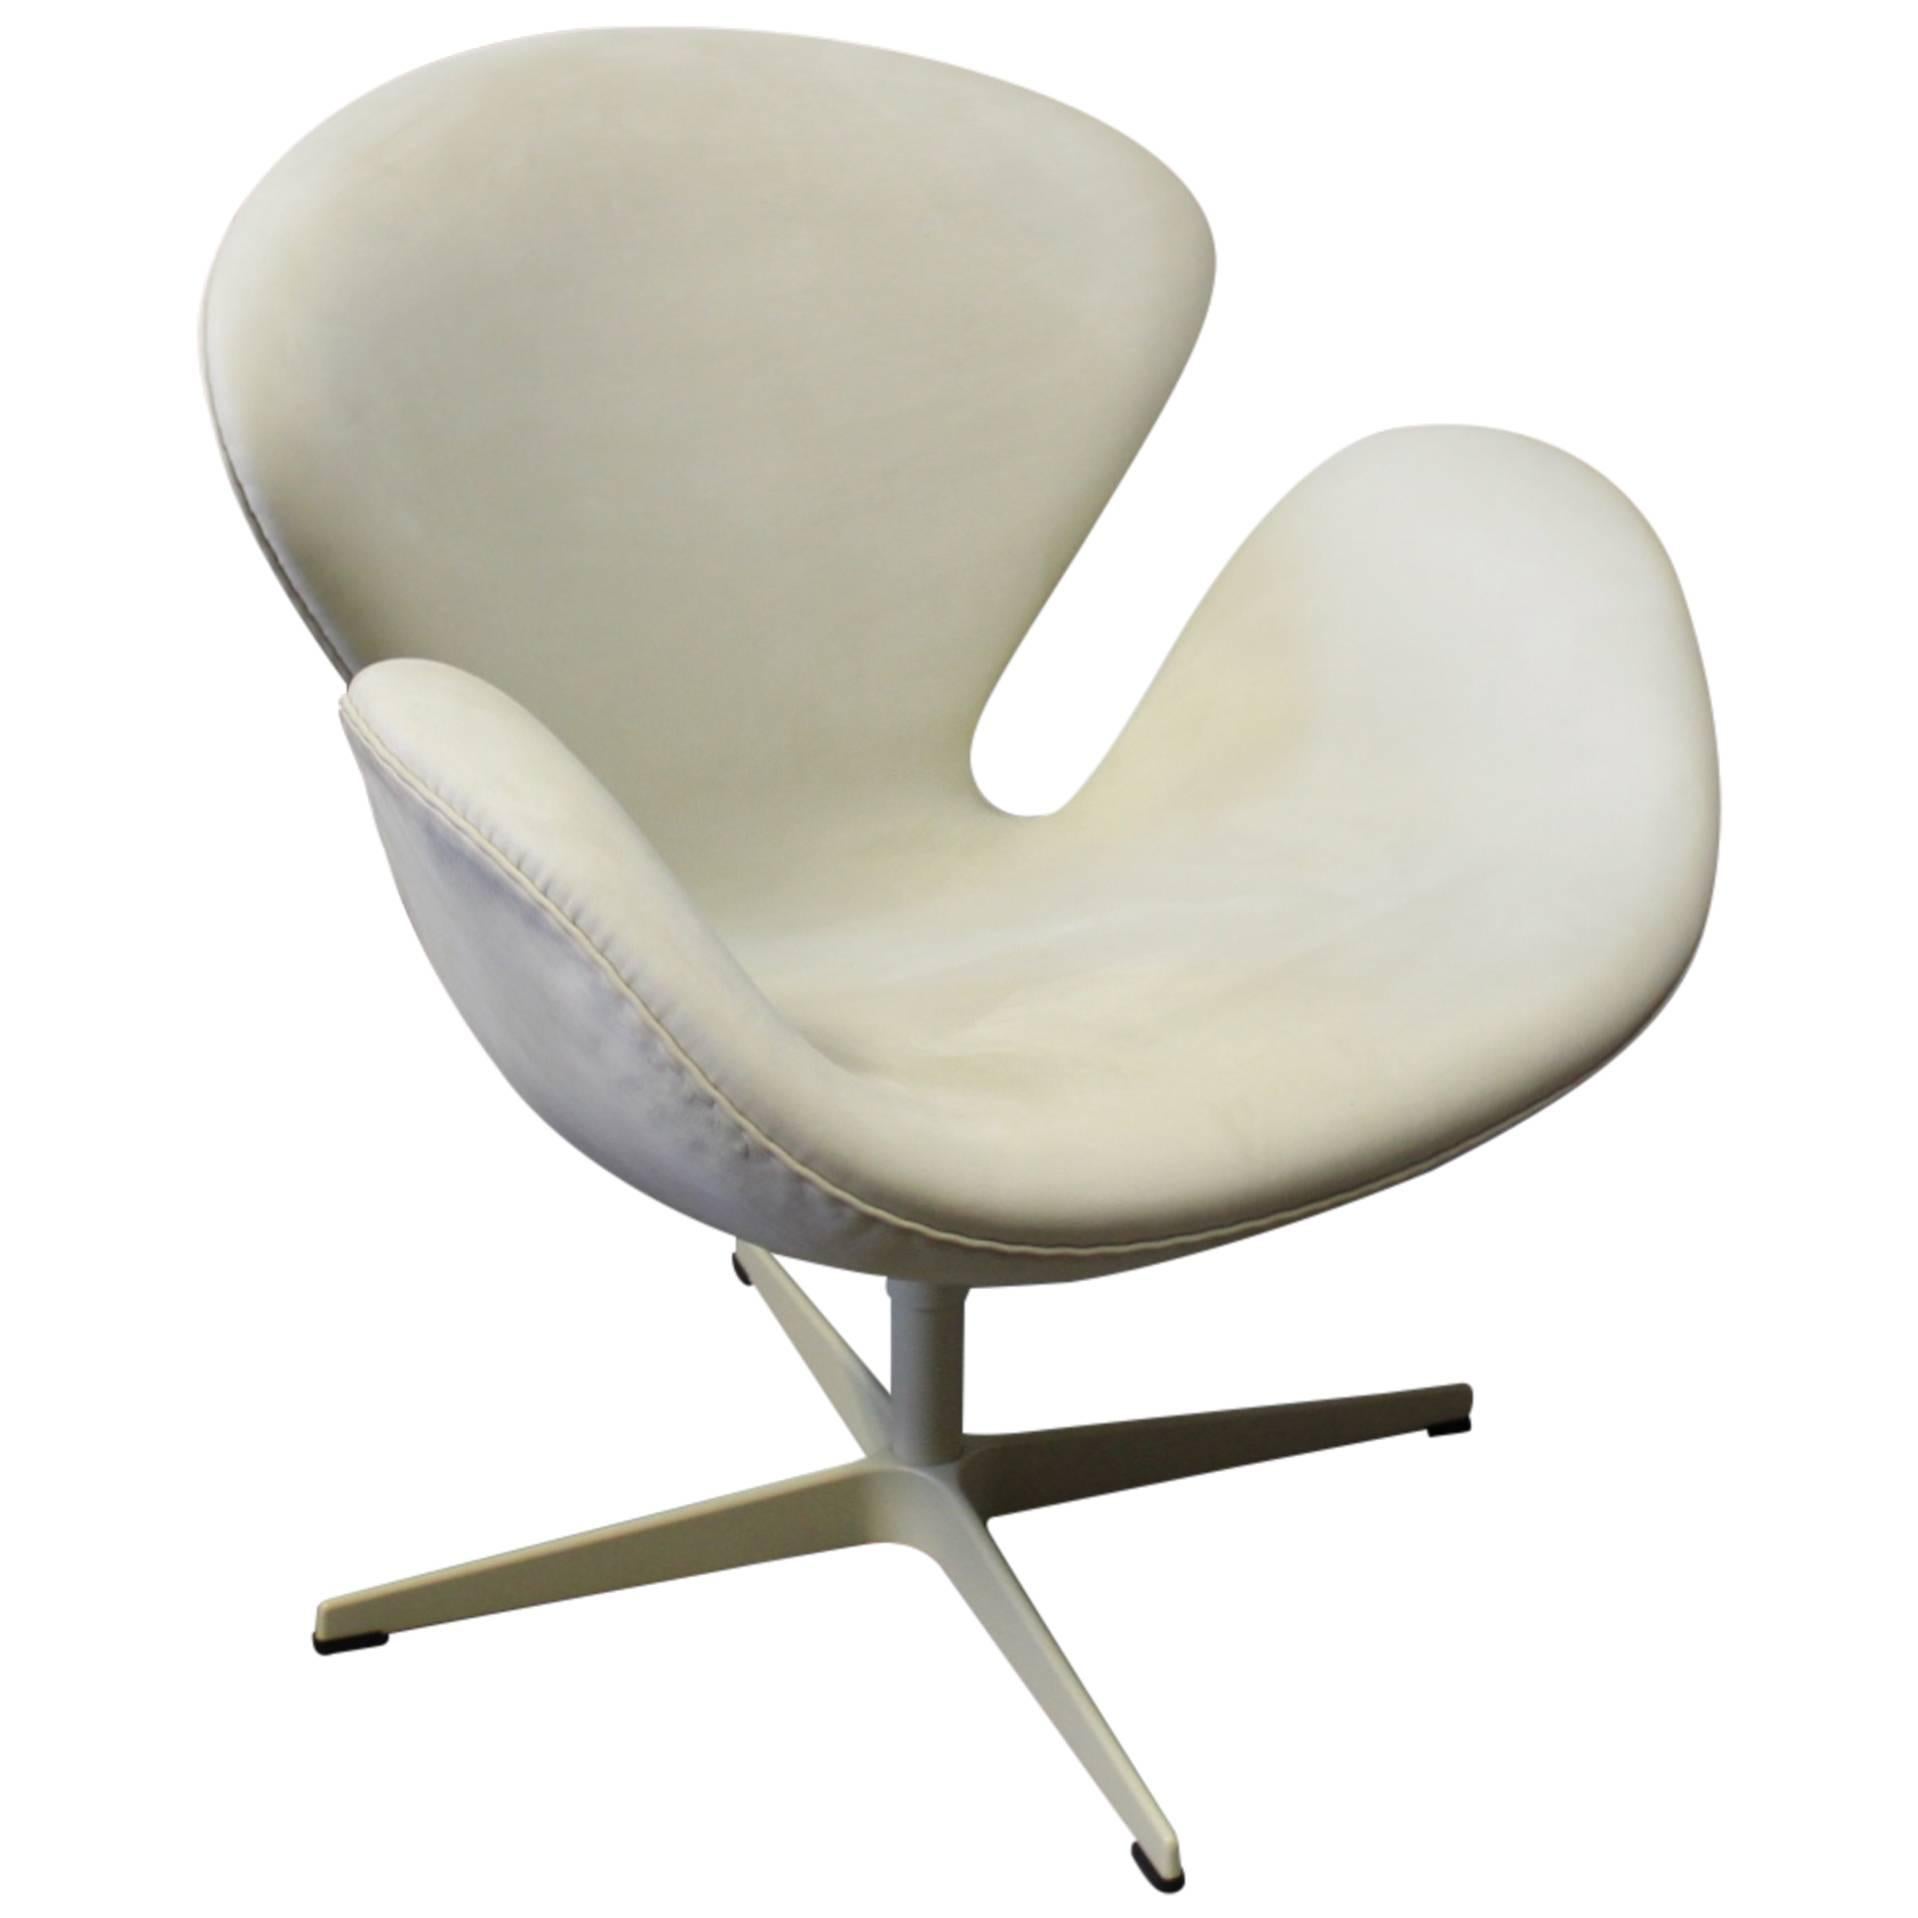 Swan Chair Limited Edition "Fritz Hansen's Choice, " Design by Arne Jacobsen 2015